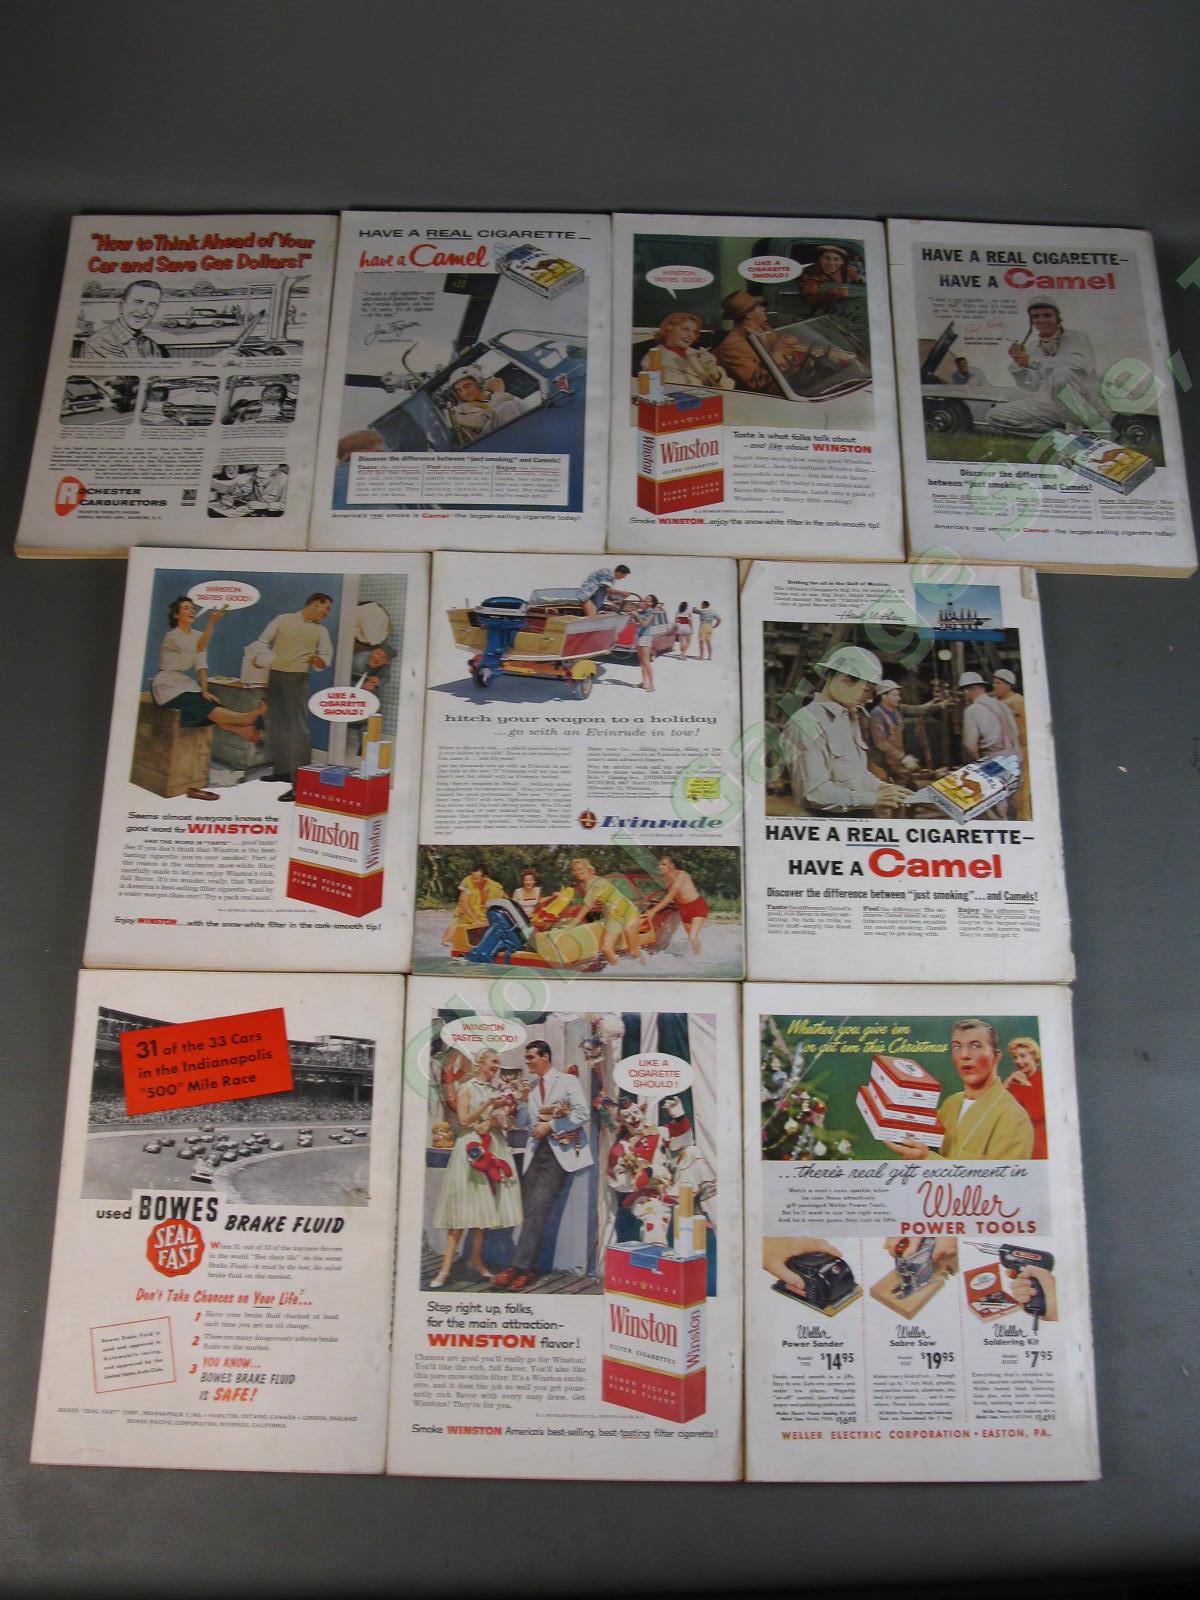 LOT of 10 Original VINTAGE 1957 Popular Mechanics Magazine Book Set 